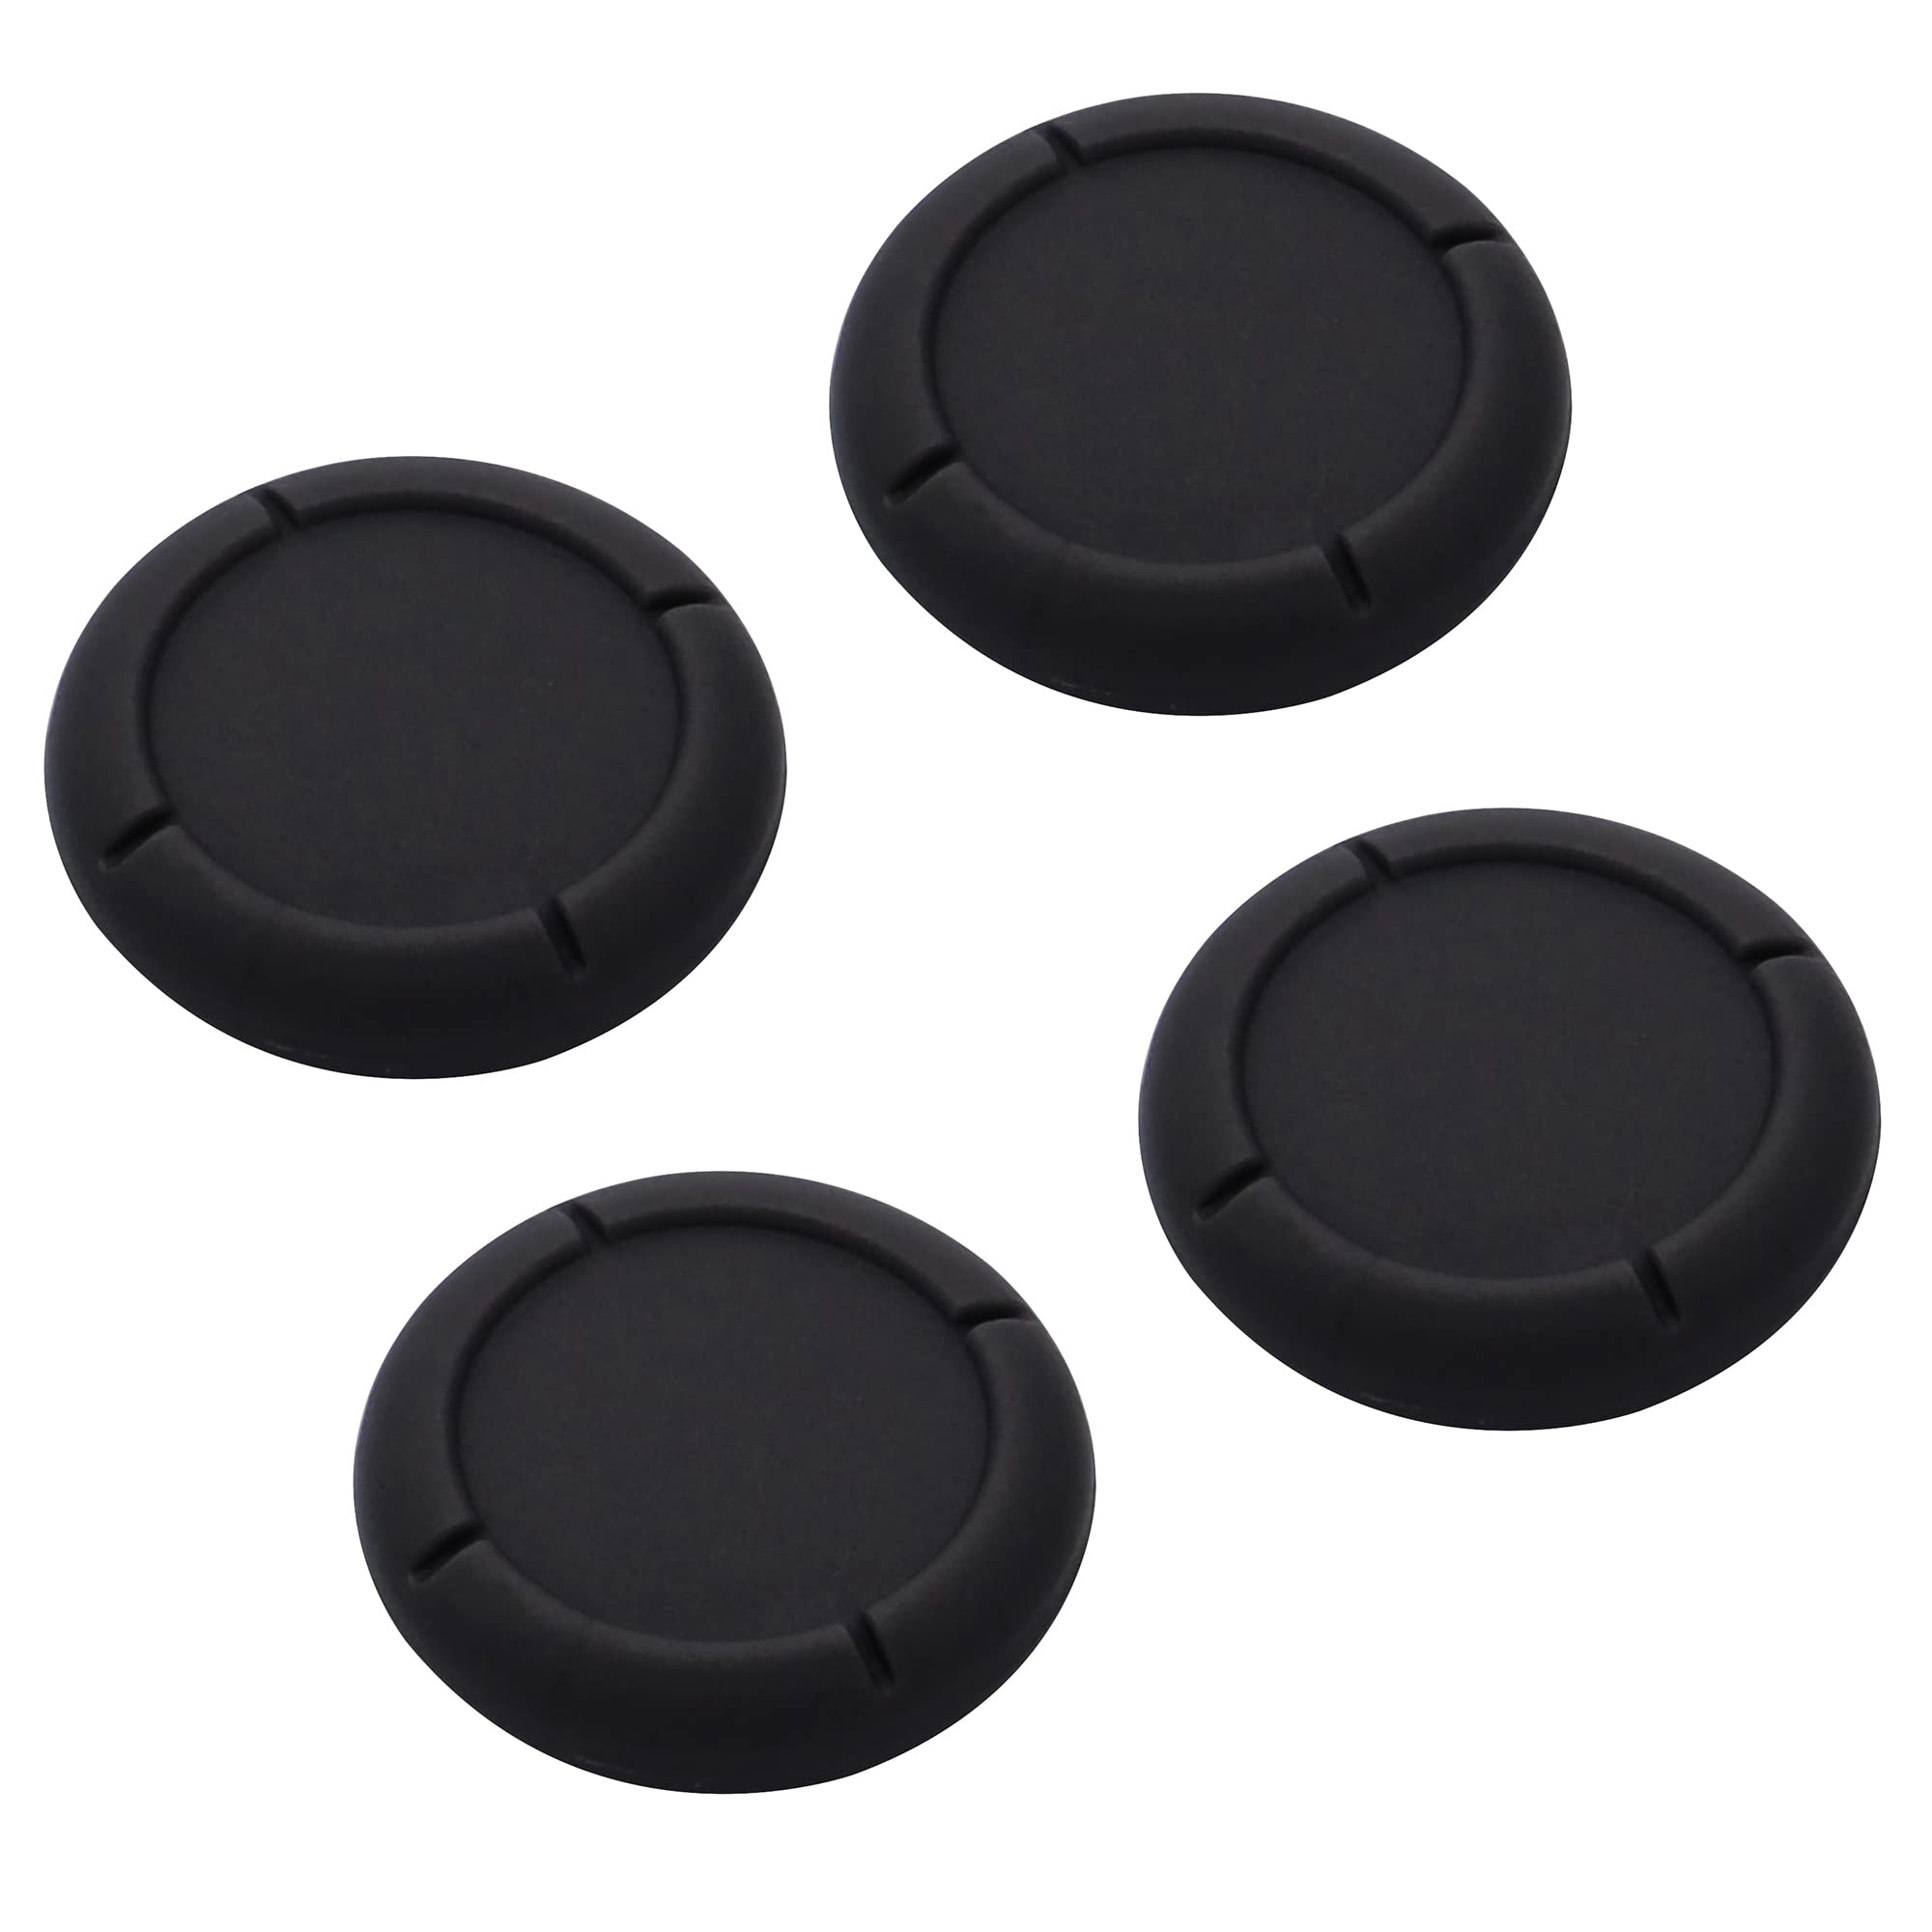 RAオーディオファン Switch Joy-Con用 アナログジョイスティック キャップ カバー4点セット 黒色